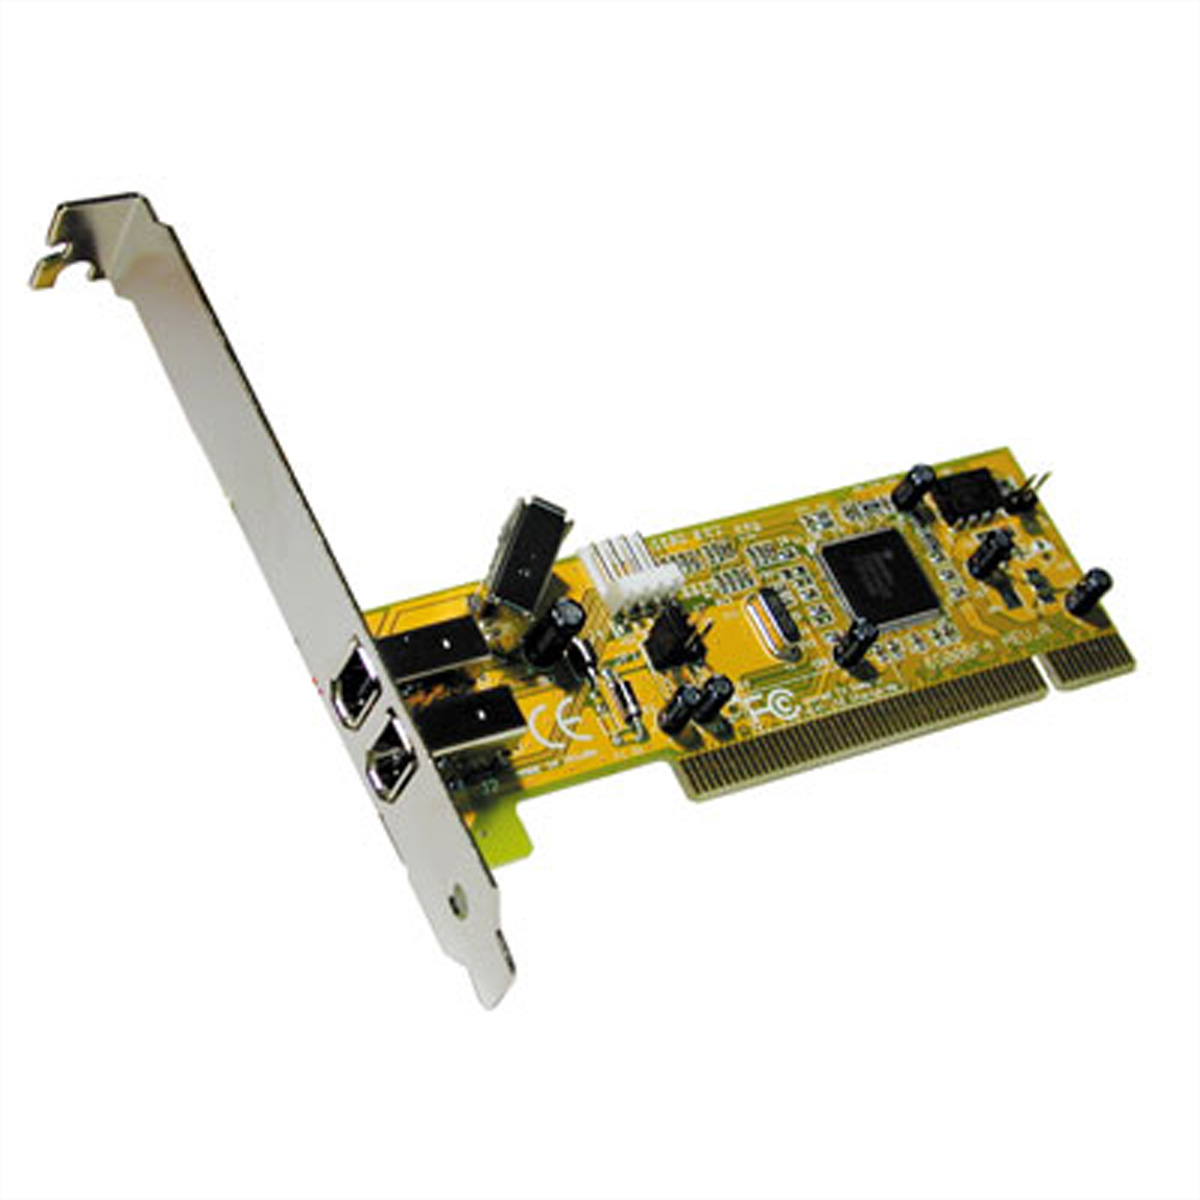 EXSYS 2+1 Port FireWire PCI Card interface cards/adapter